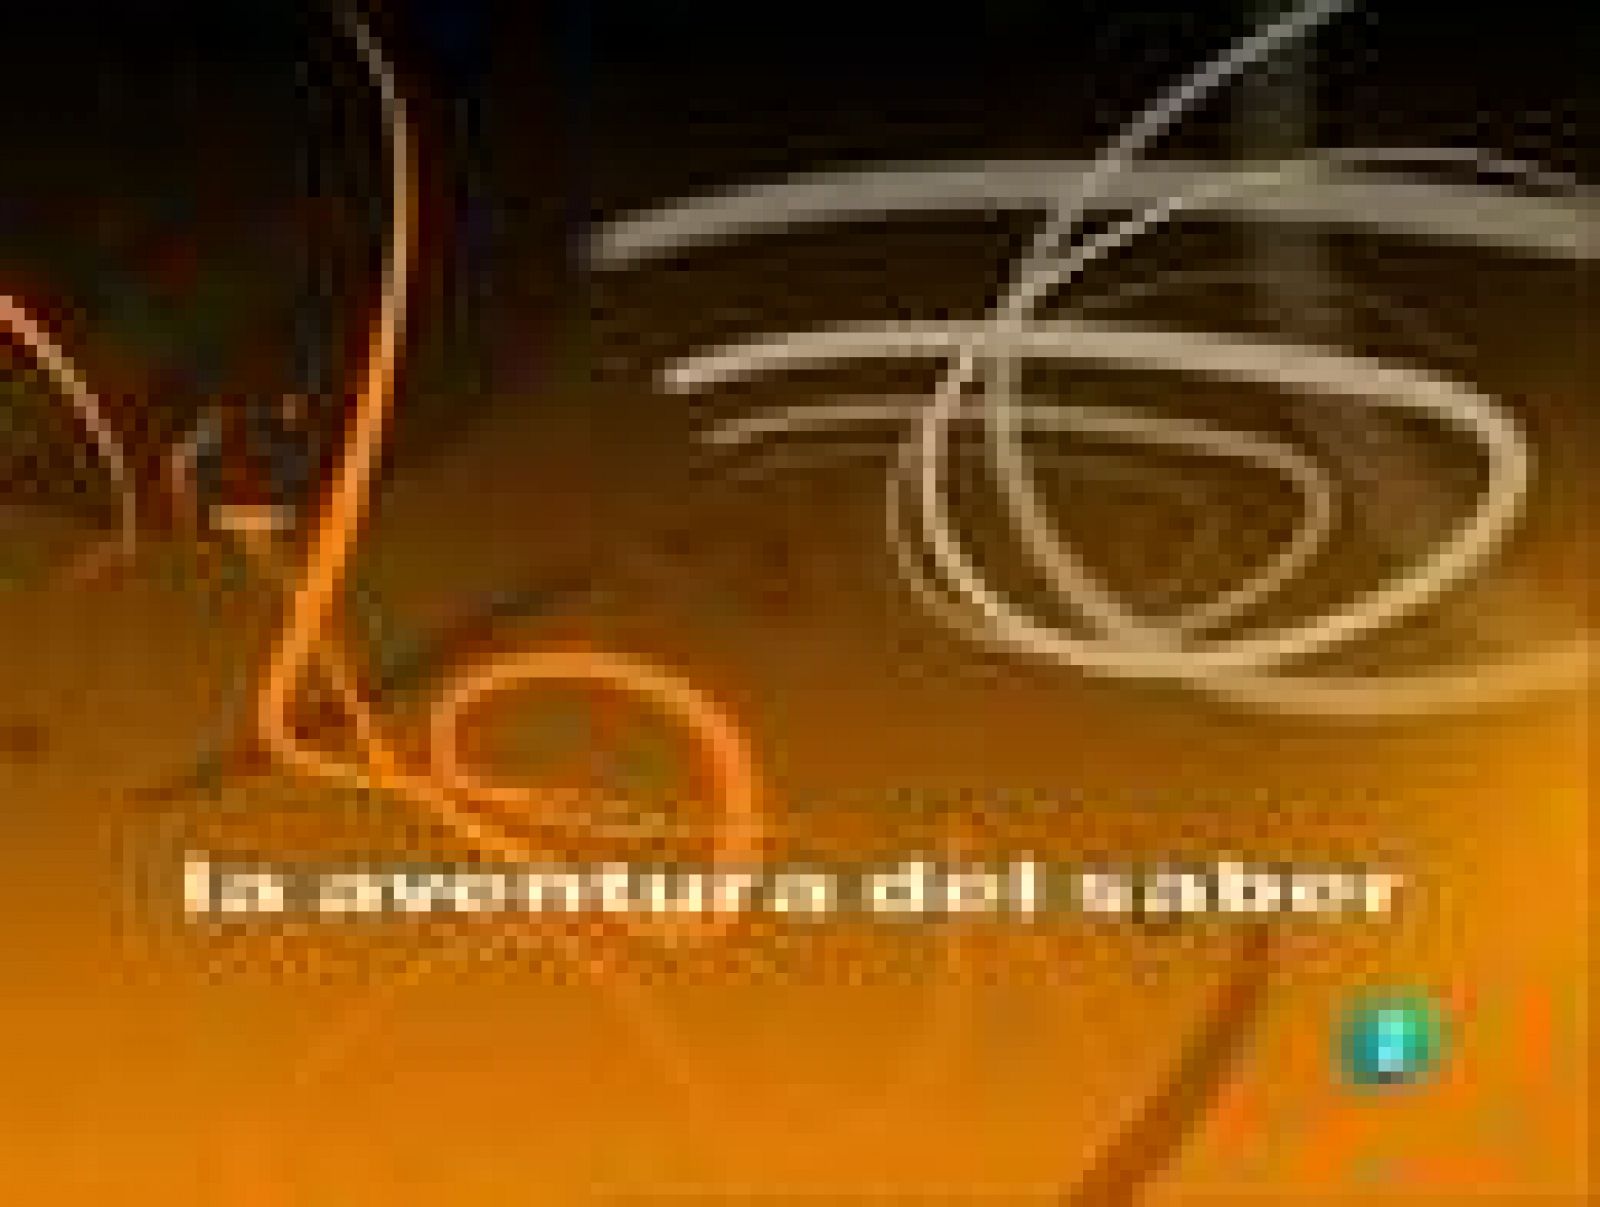 La aventura del Saber: La aventura del saber - Humanidades - 24/09/09 | RTVE Play